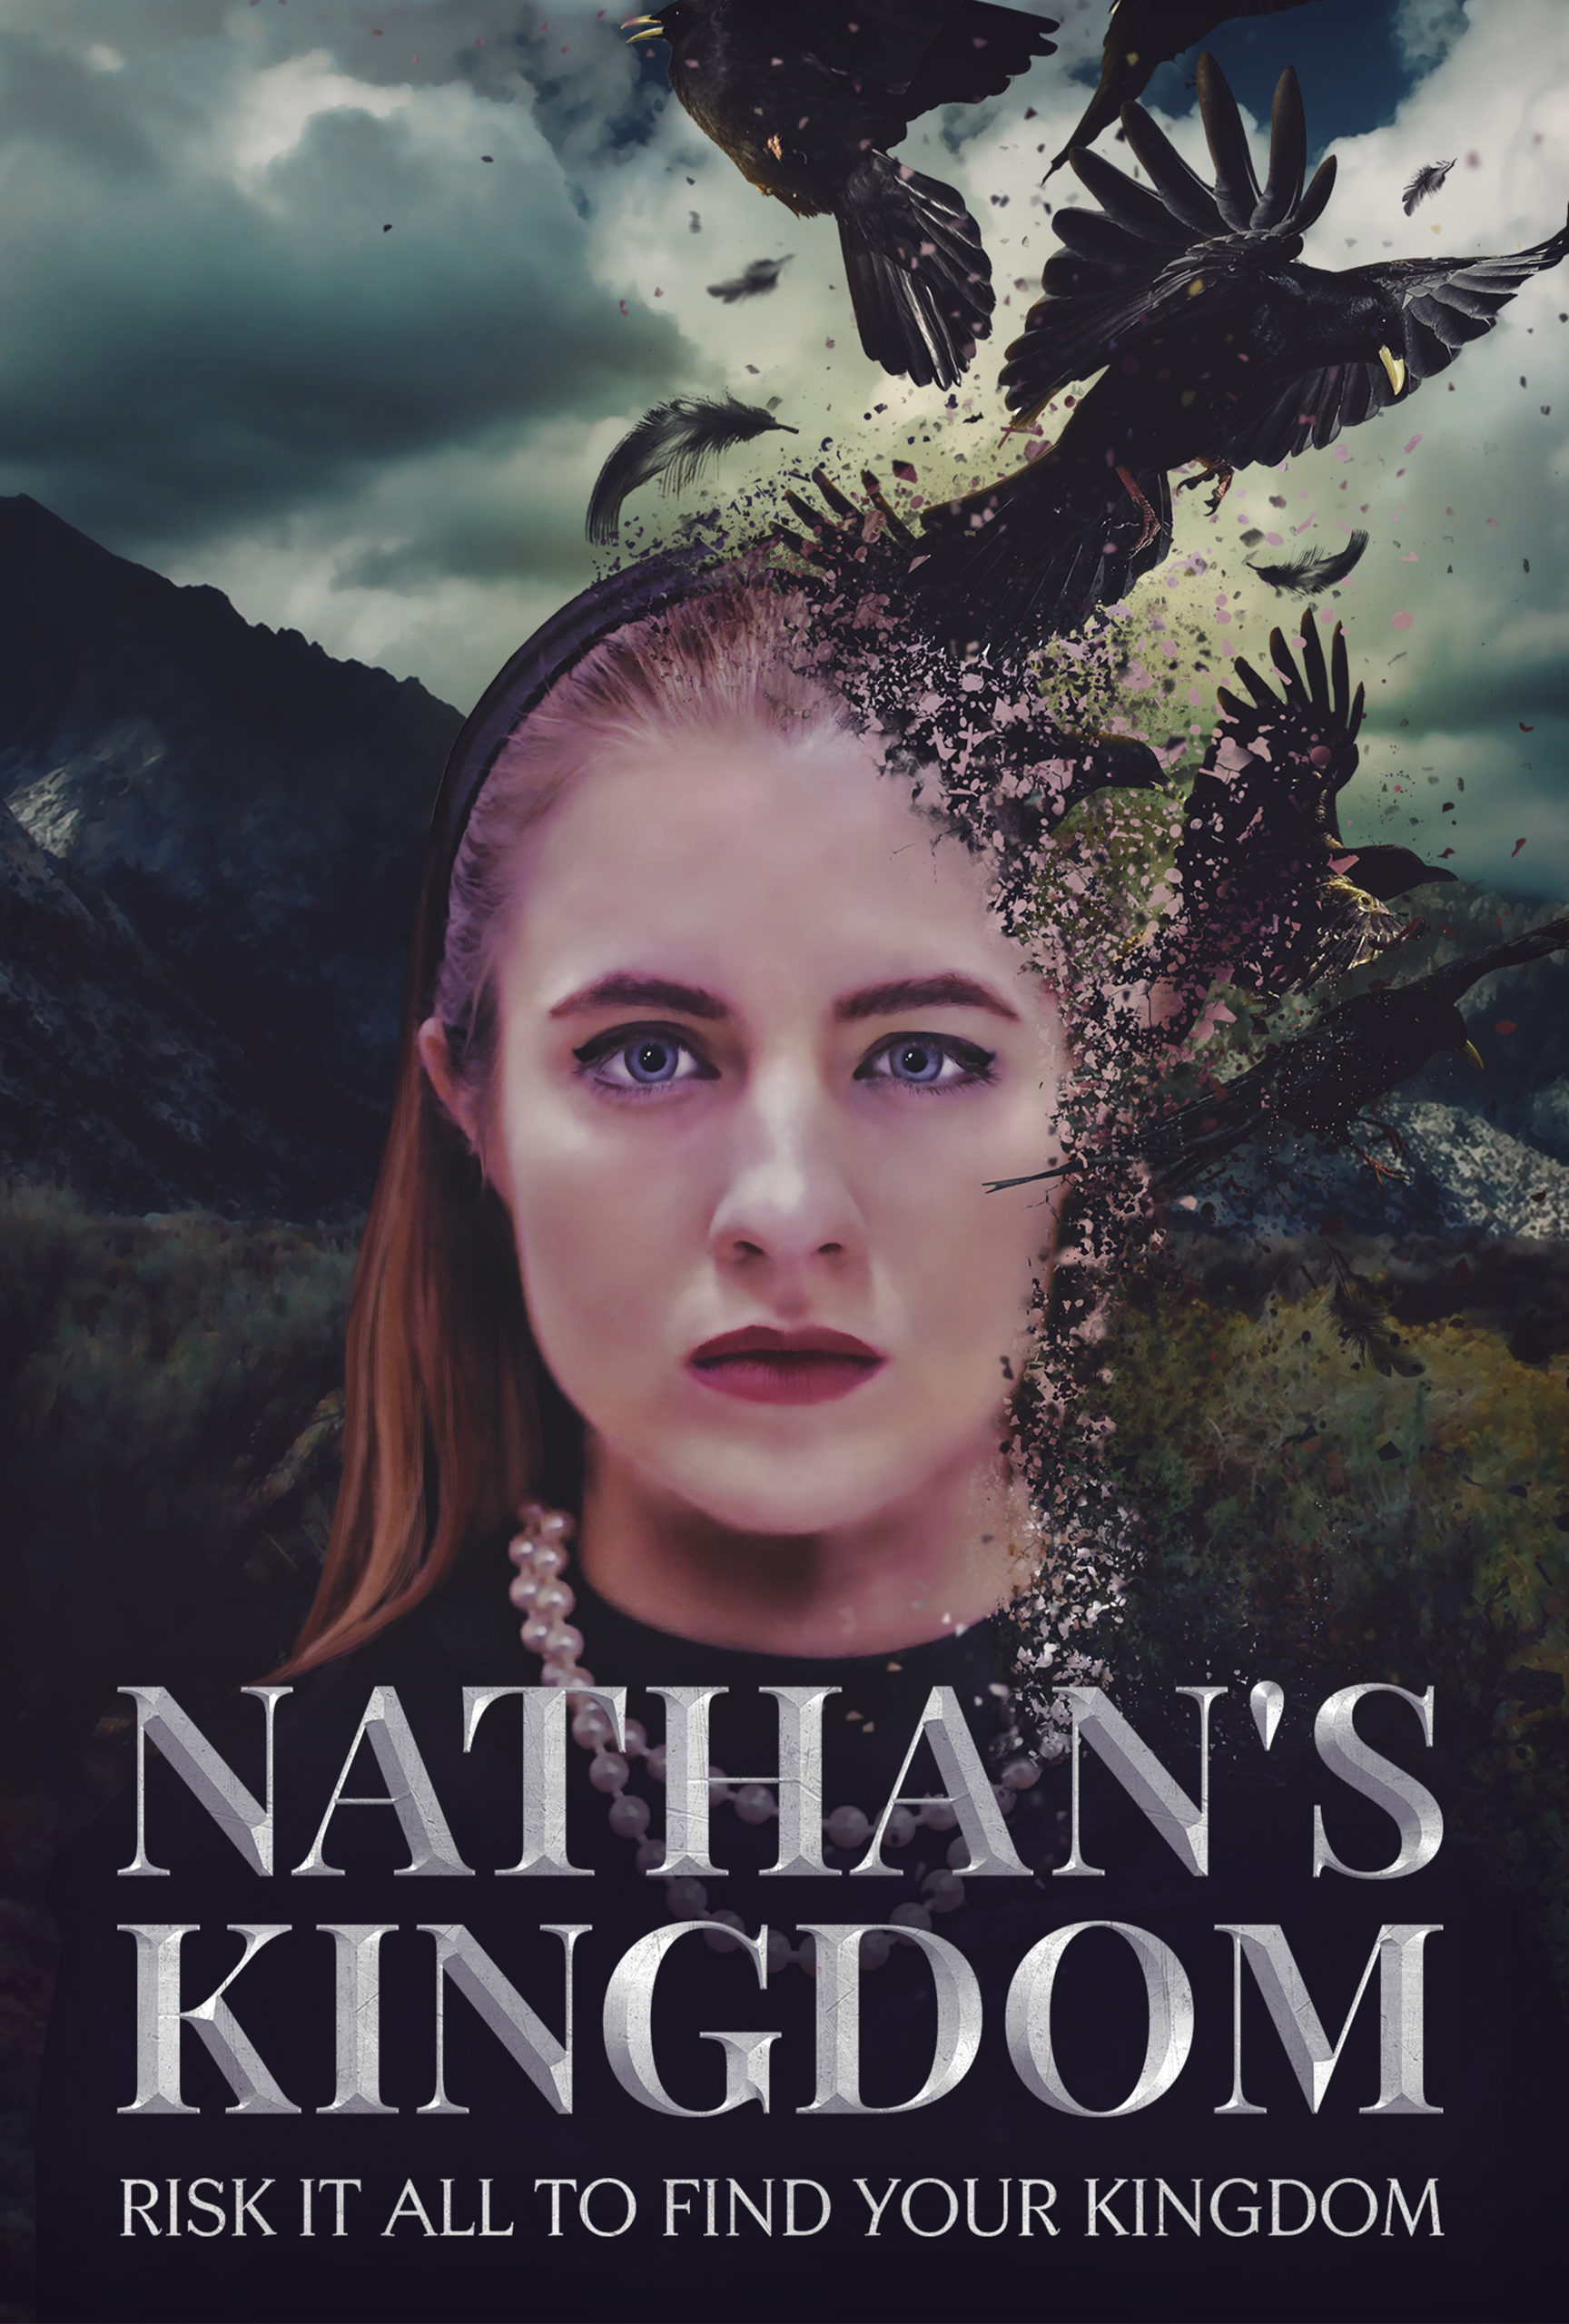 Nathan's Kingdom (2020)